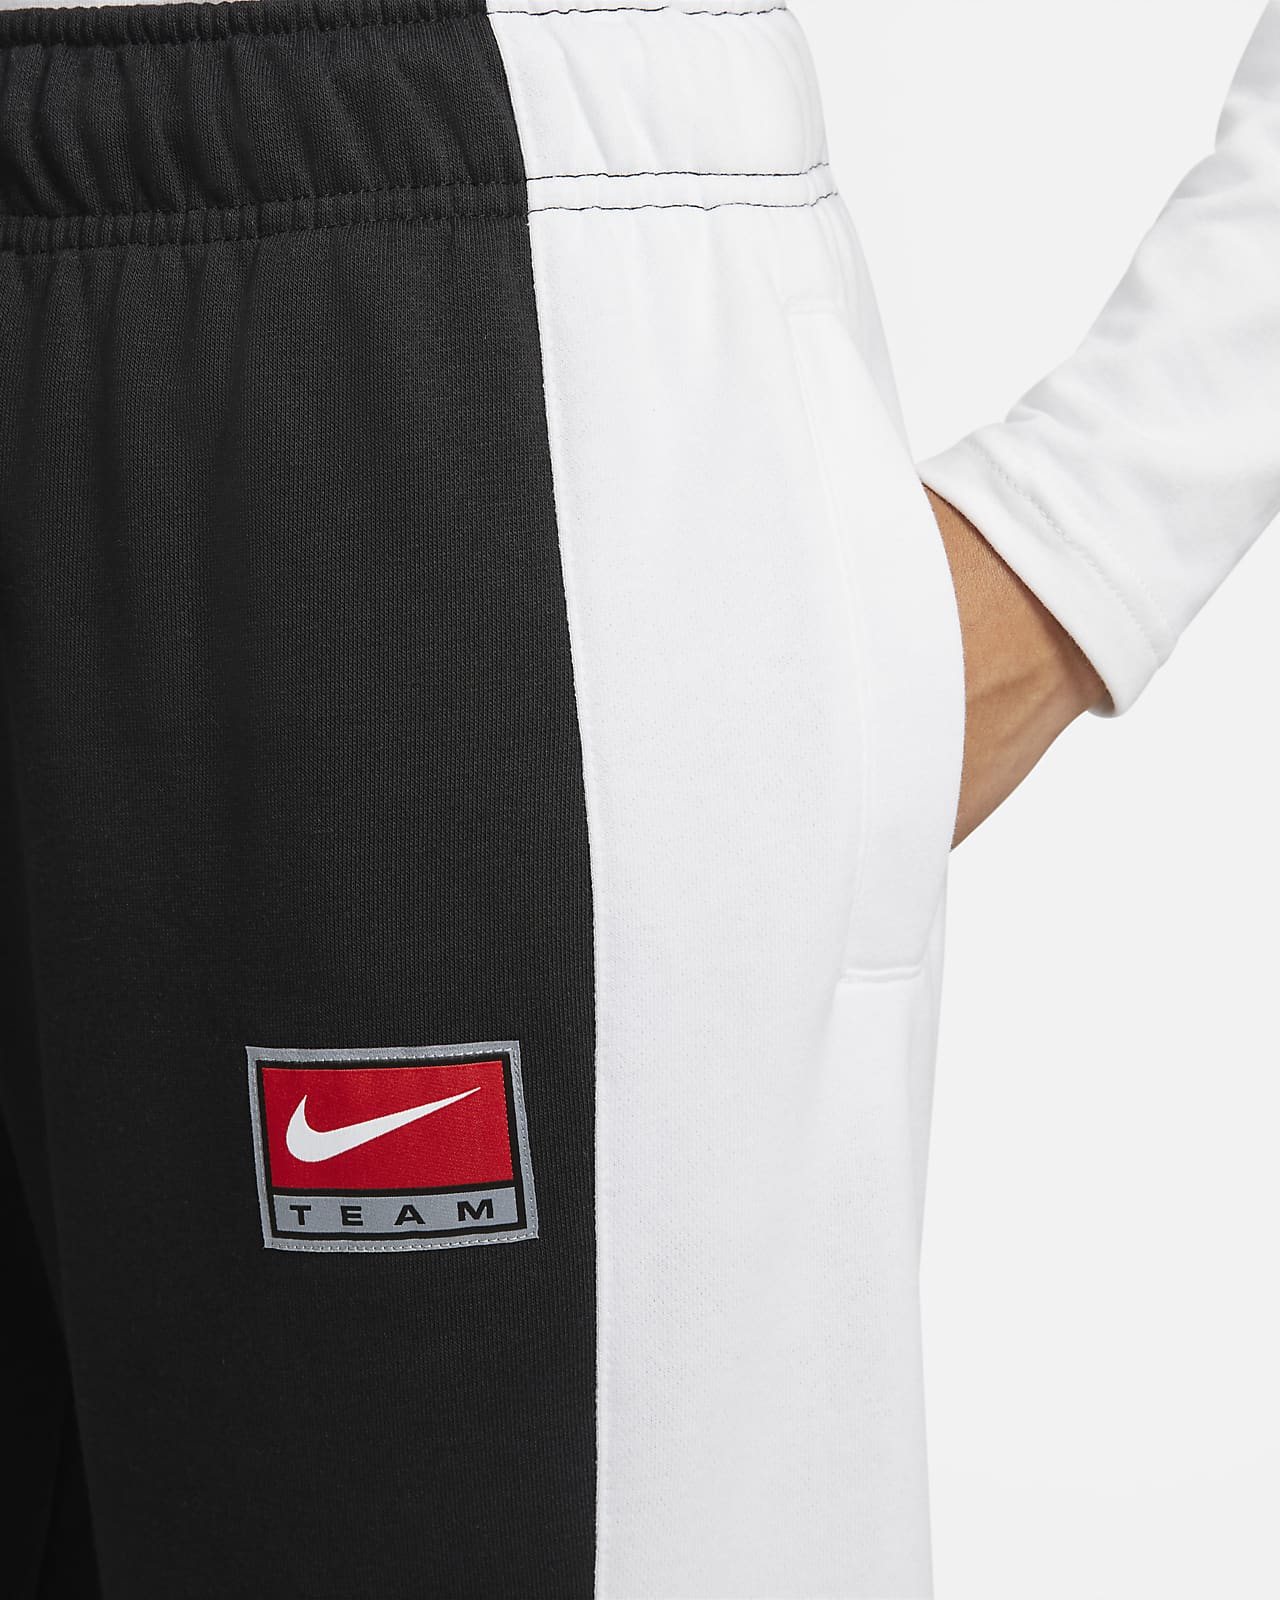 Women's Nike Black/White Essential Fleece Joggers (BV4099 010) - M 